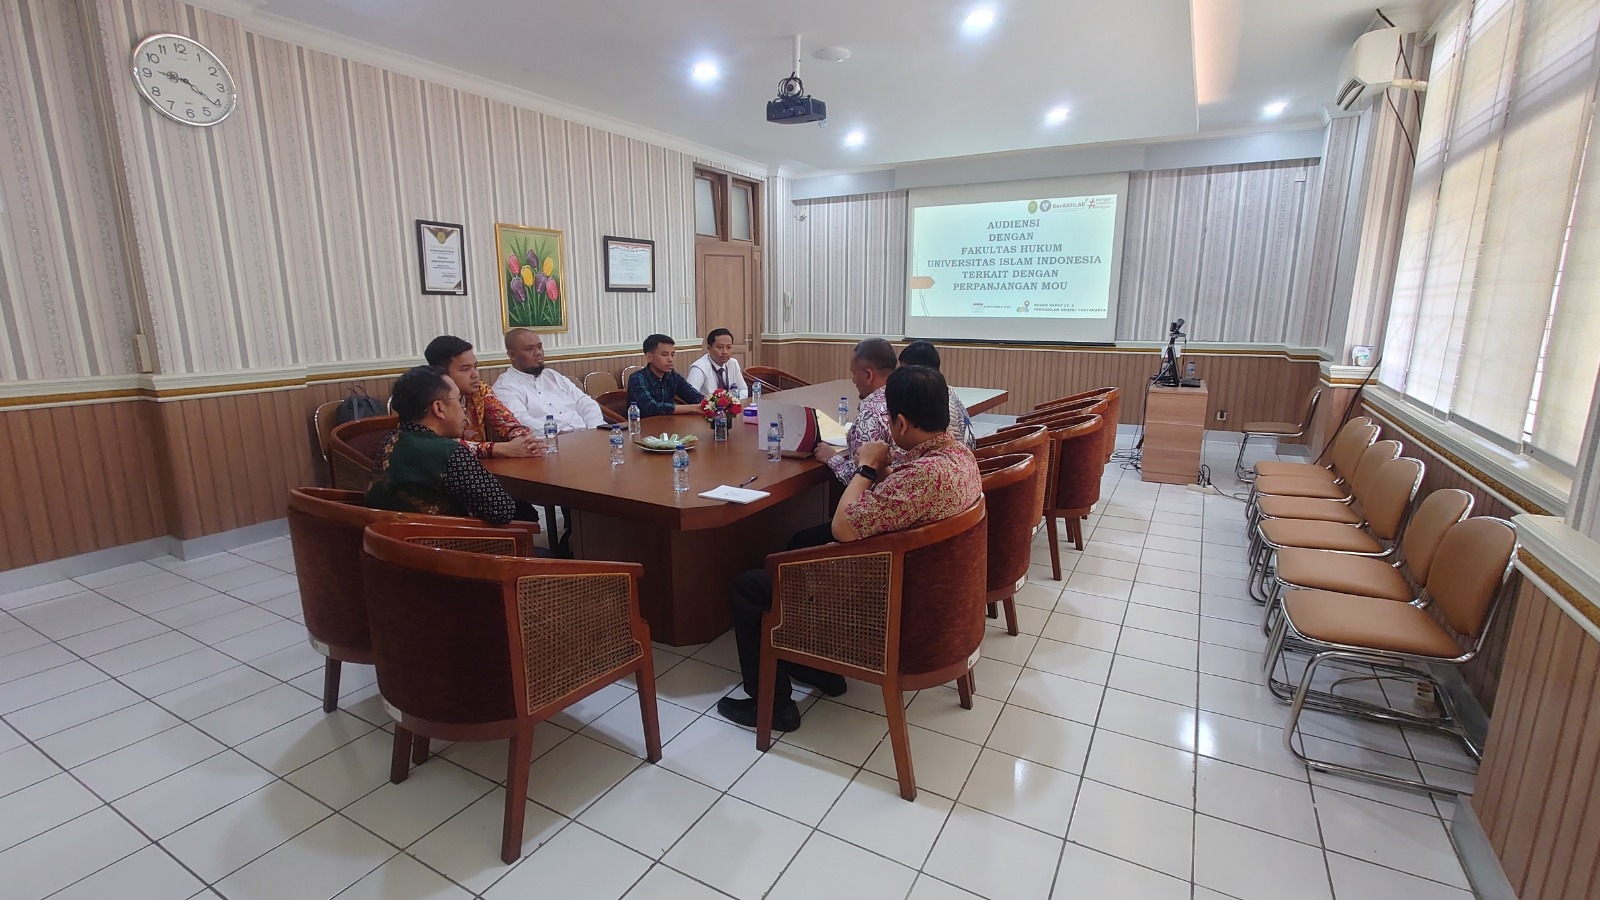 Audiensi terkait Permohonan Perpanjangan Kerjasama (Mou) antara Pengadilan Negeri Yogyakarta dan Fakultas Hukum UII